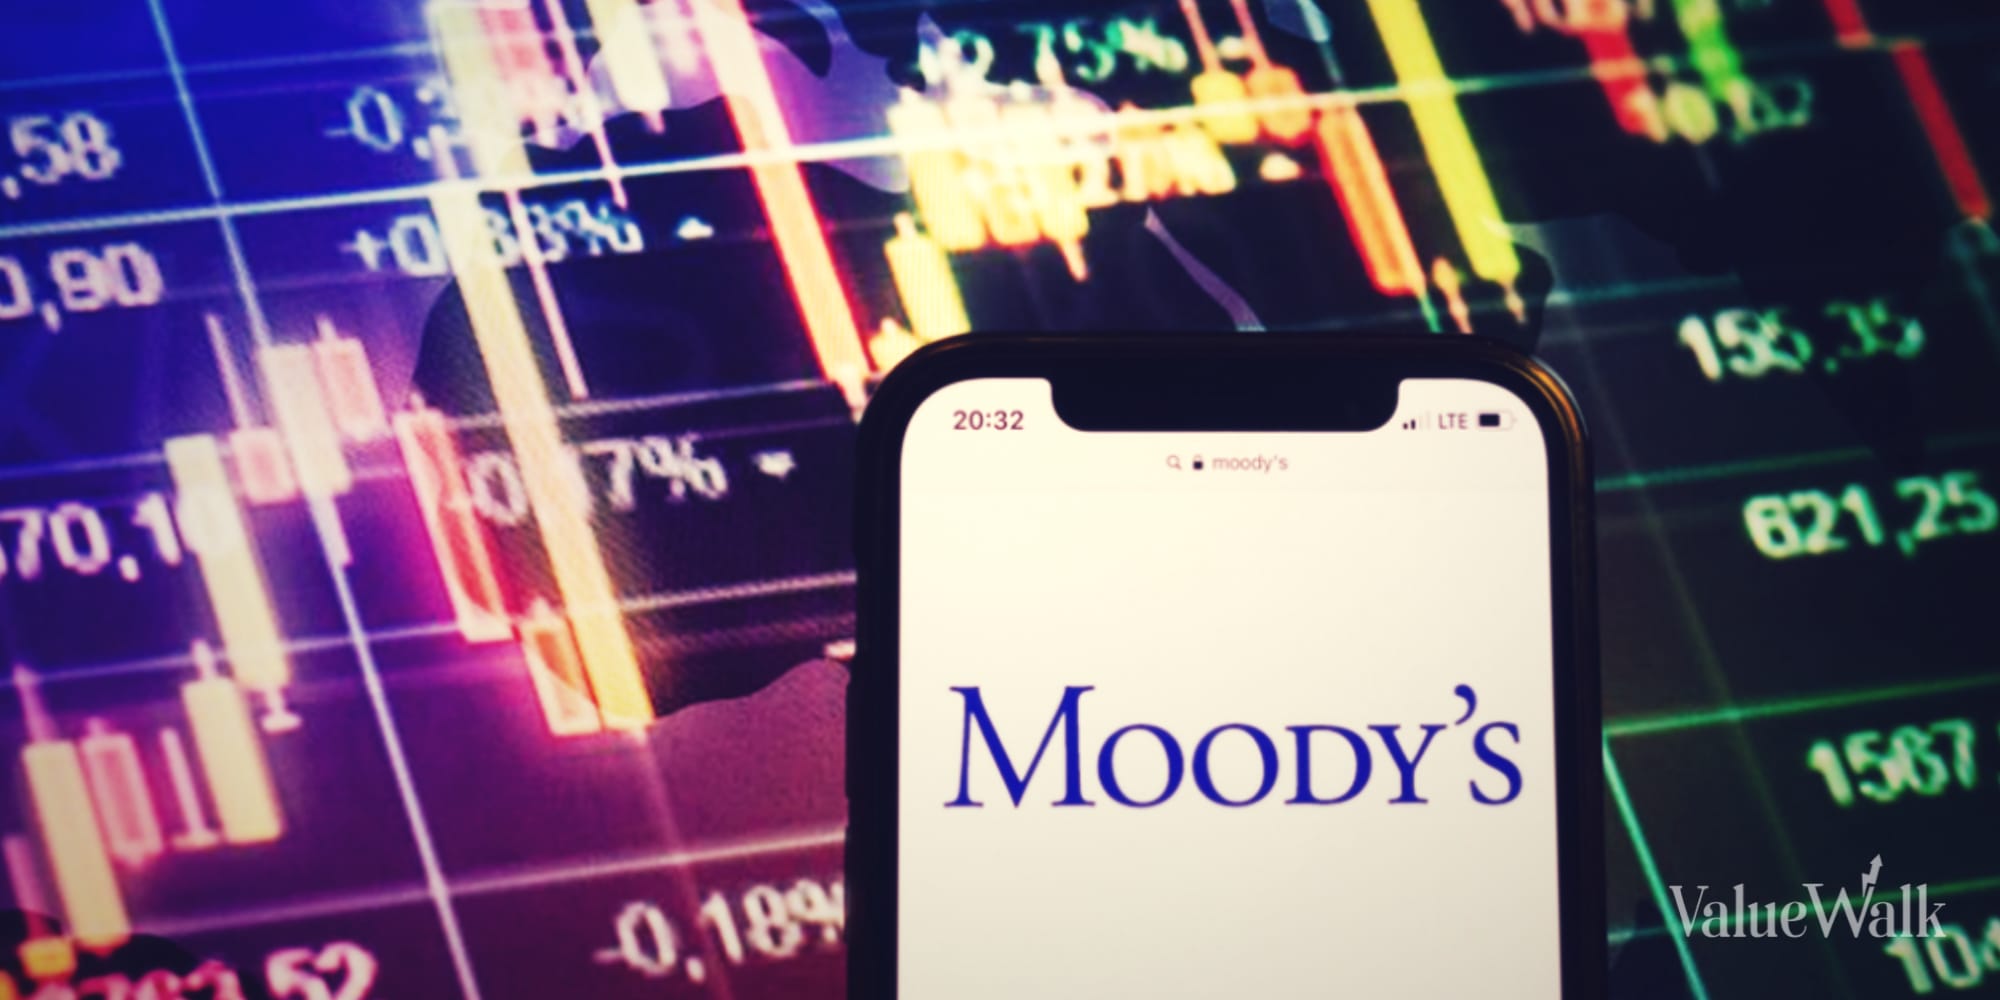 Moodys Stock